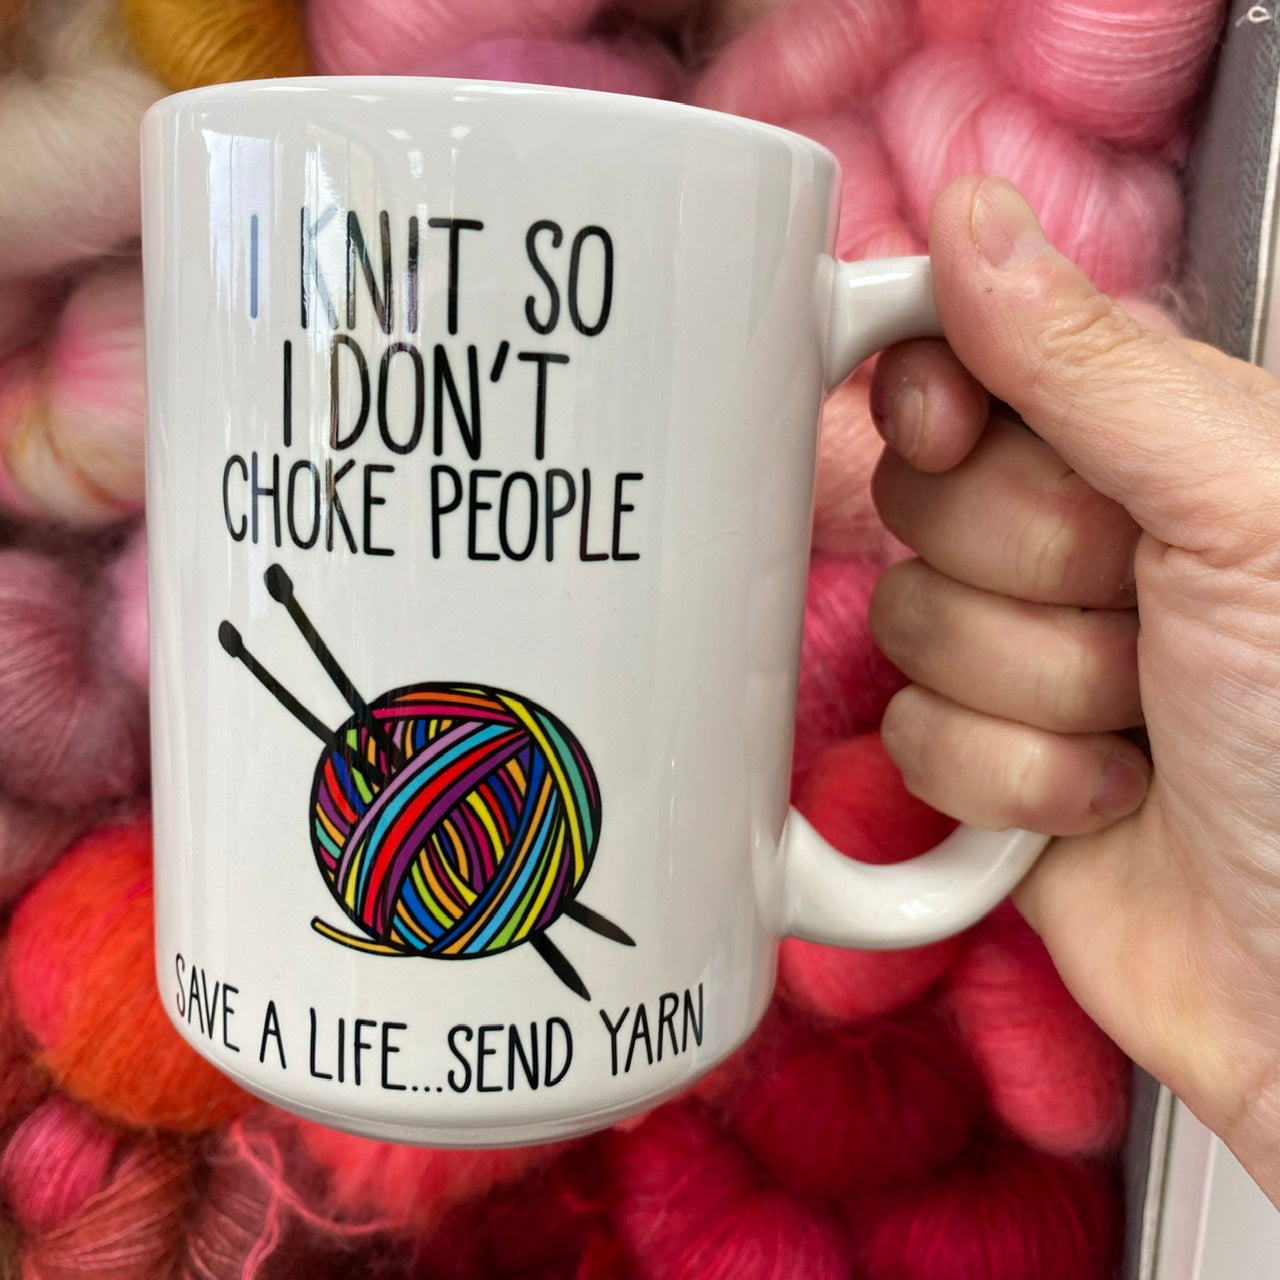 I Crochet So I Don't Choke People Yarn Bowl by Lenny Mudd